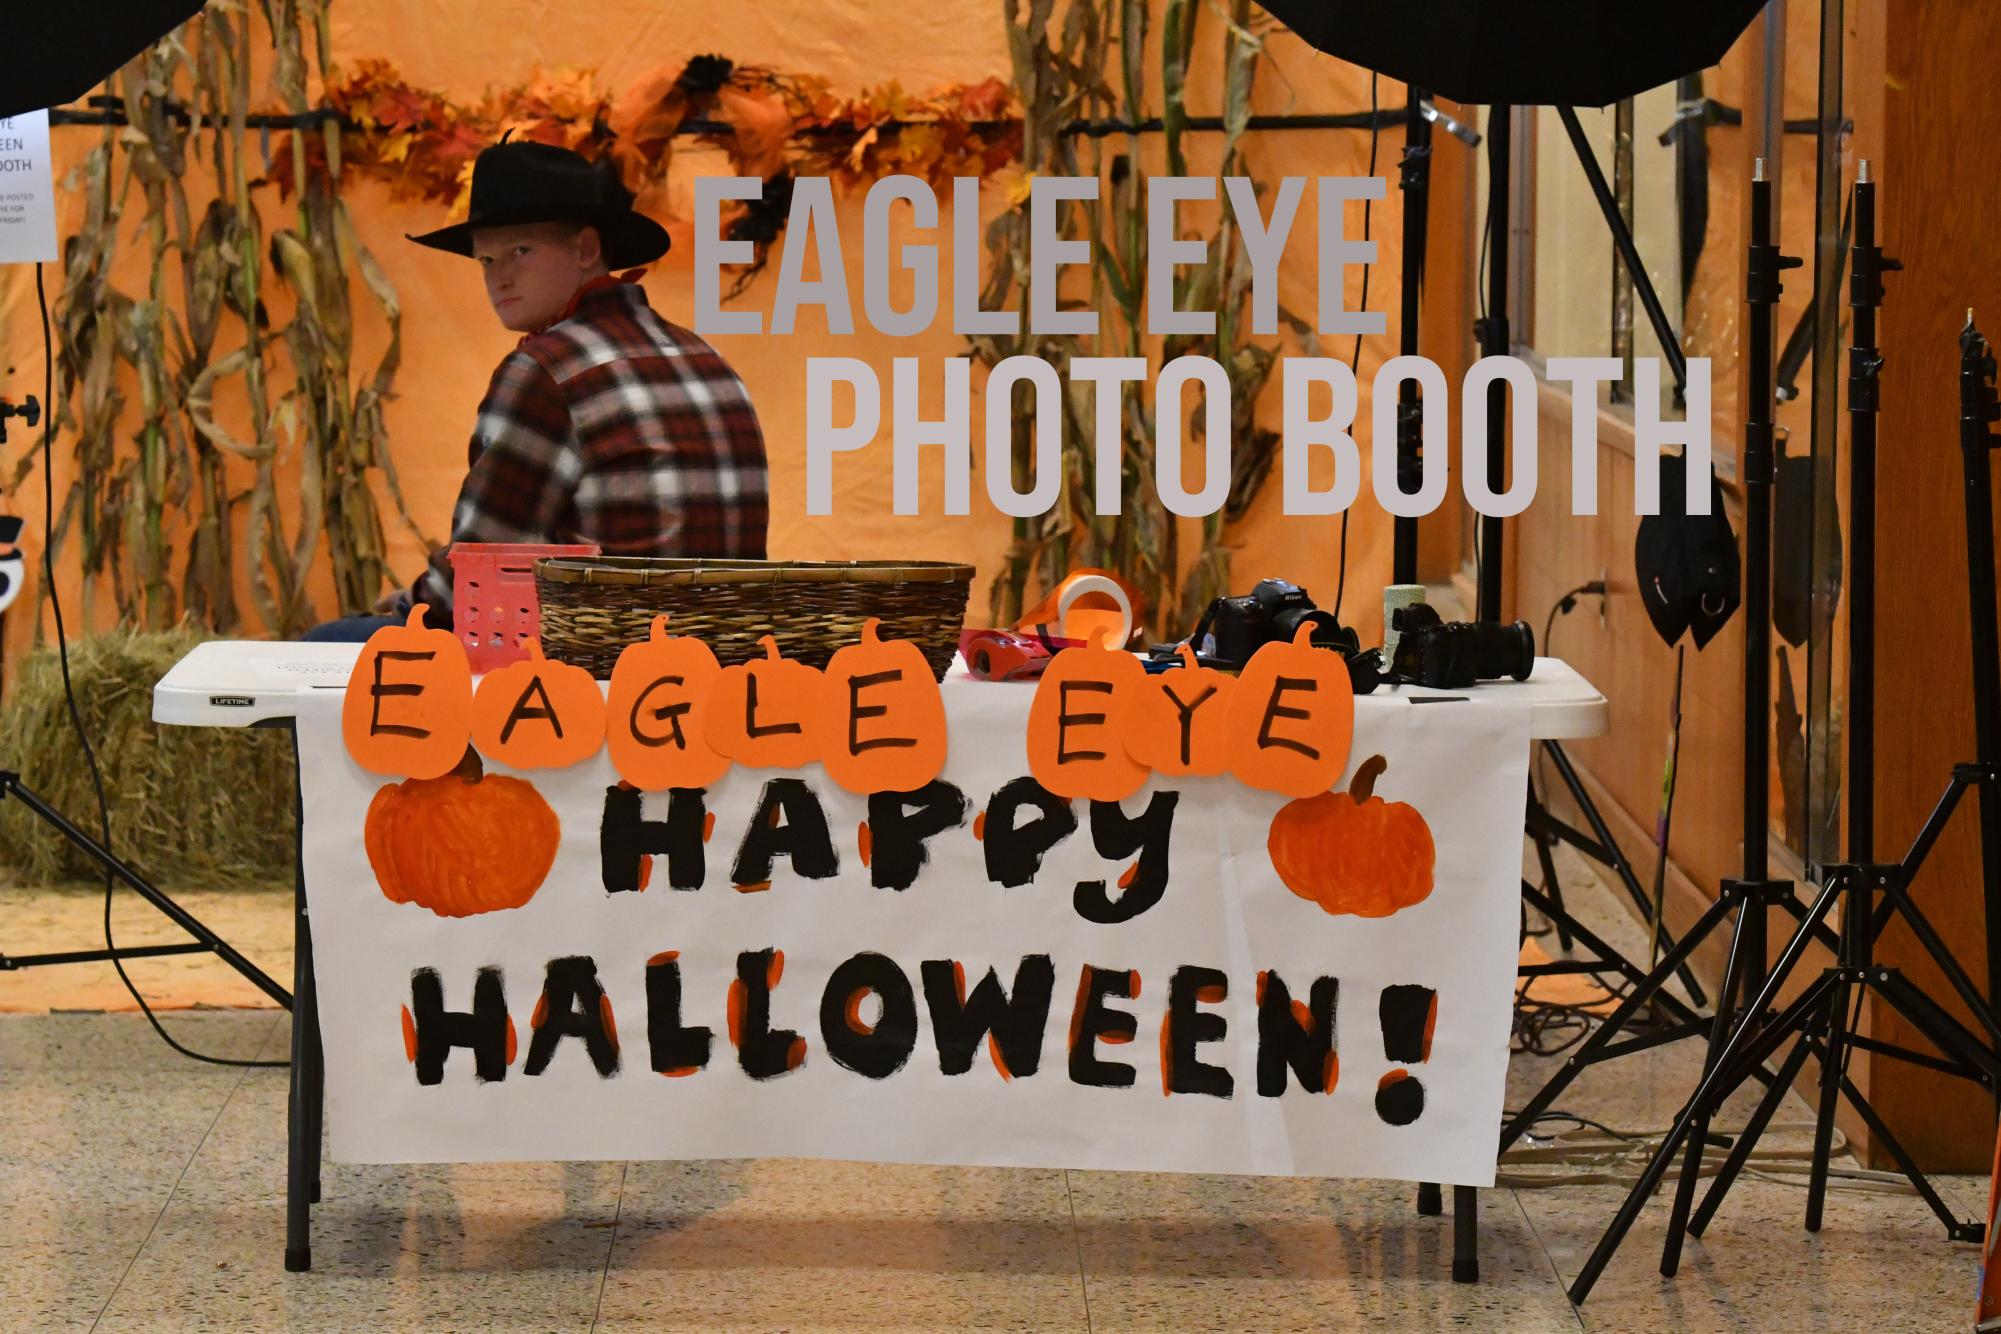 Eagle Eye Halloween Photo Booth